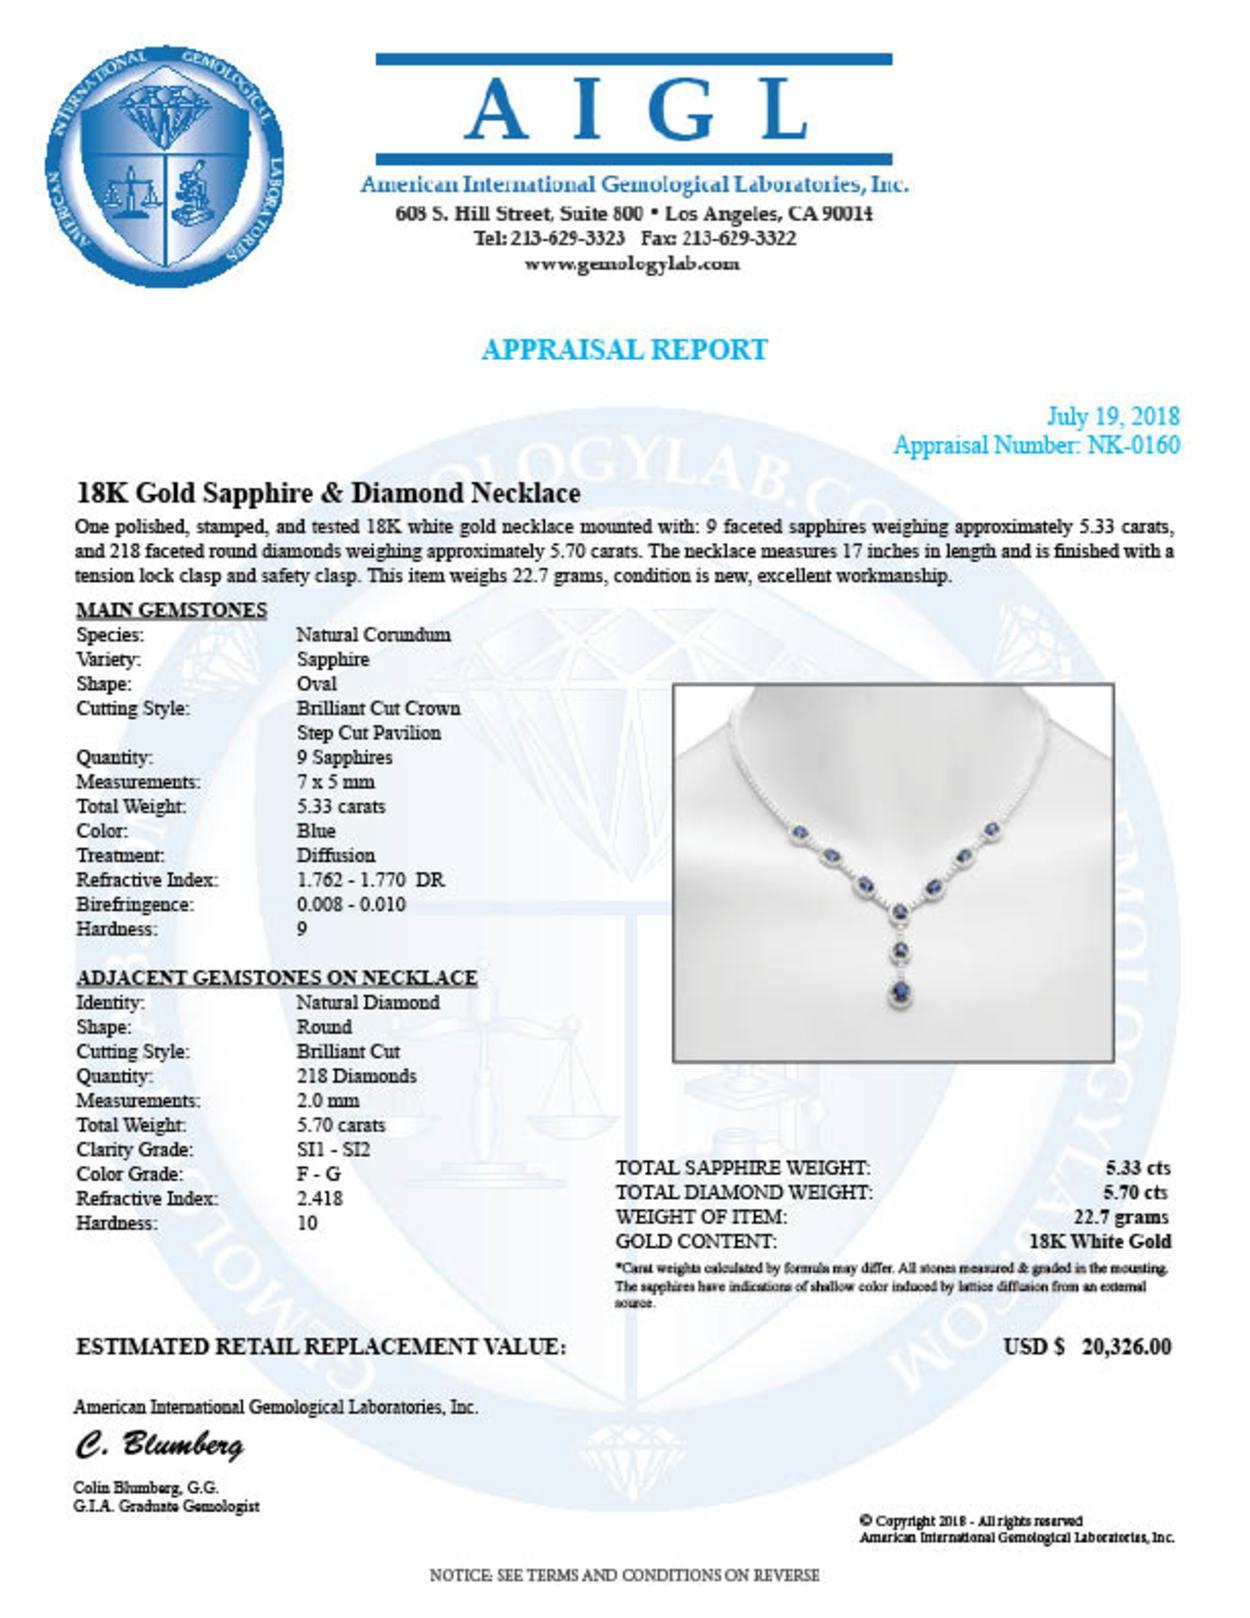 14K Gold 5.33ct Sapphire 5.70cts Diamond Necklace